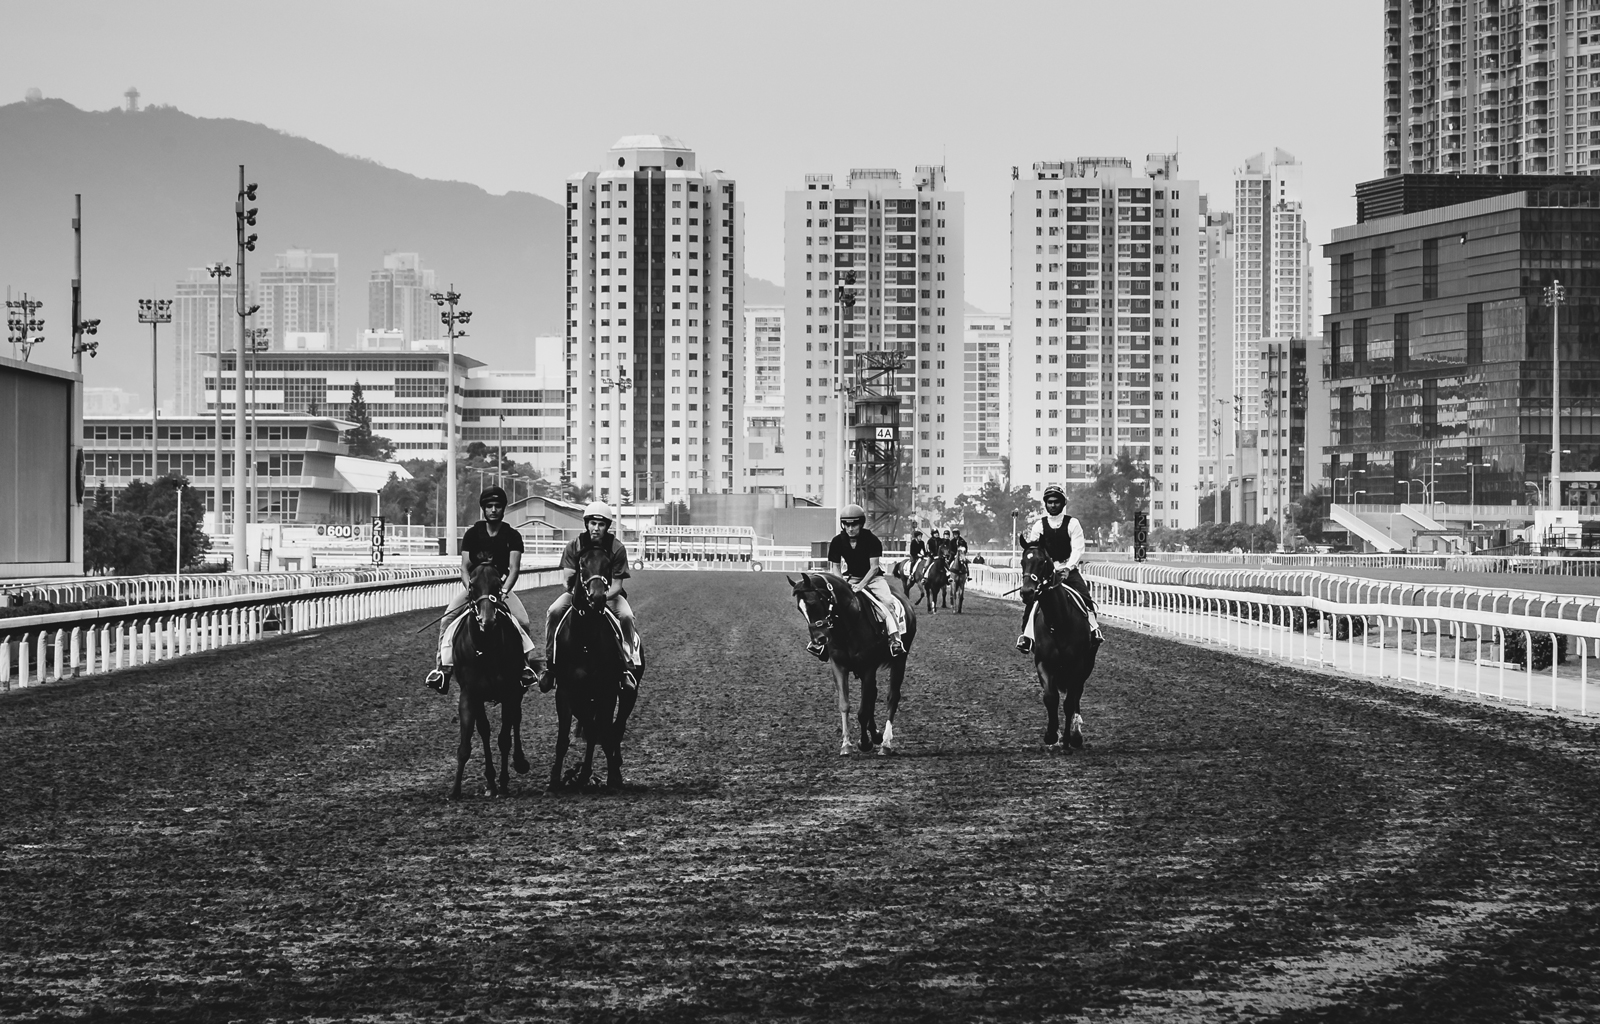 The Hong Kong Jockey Club